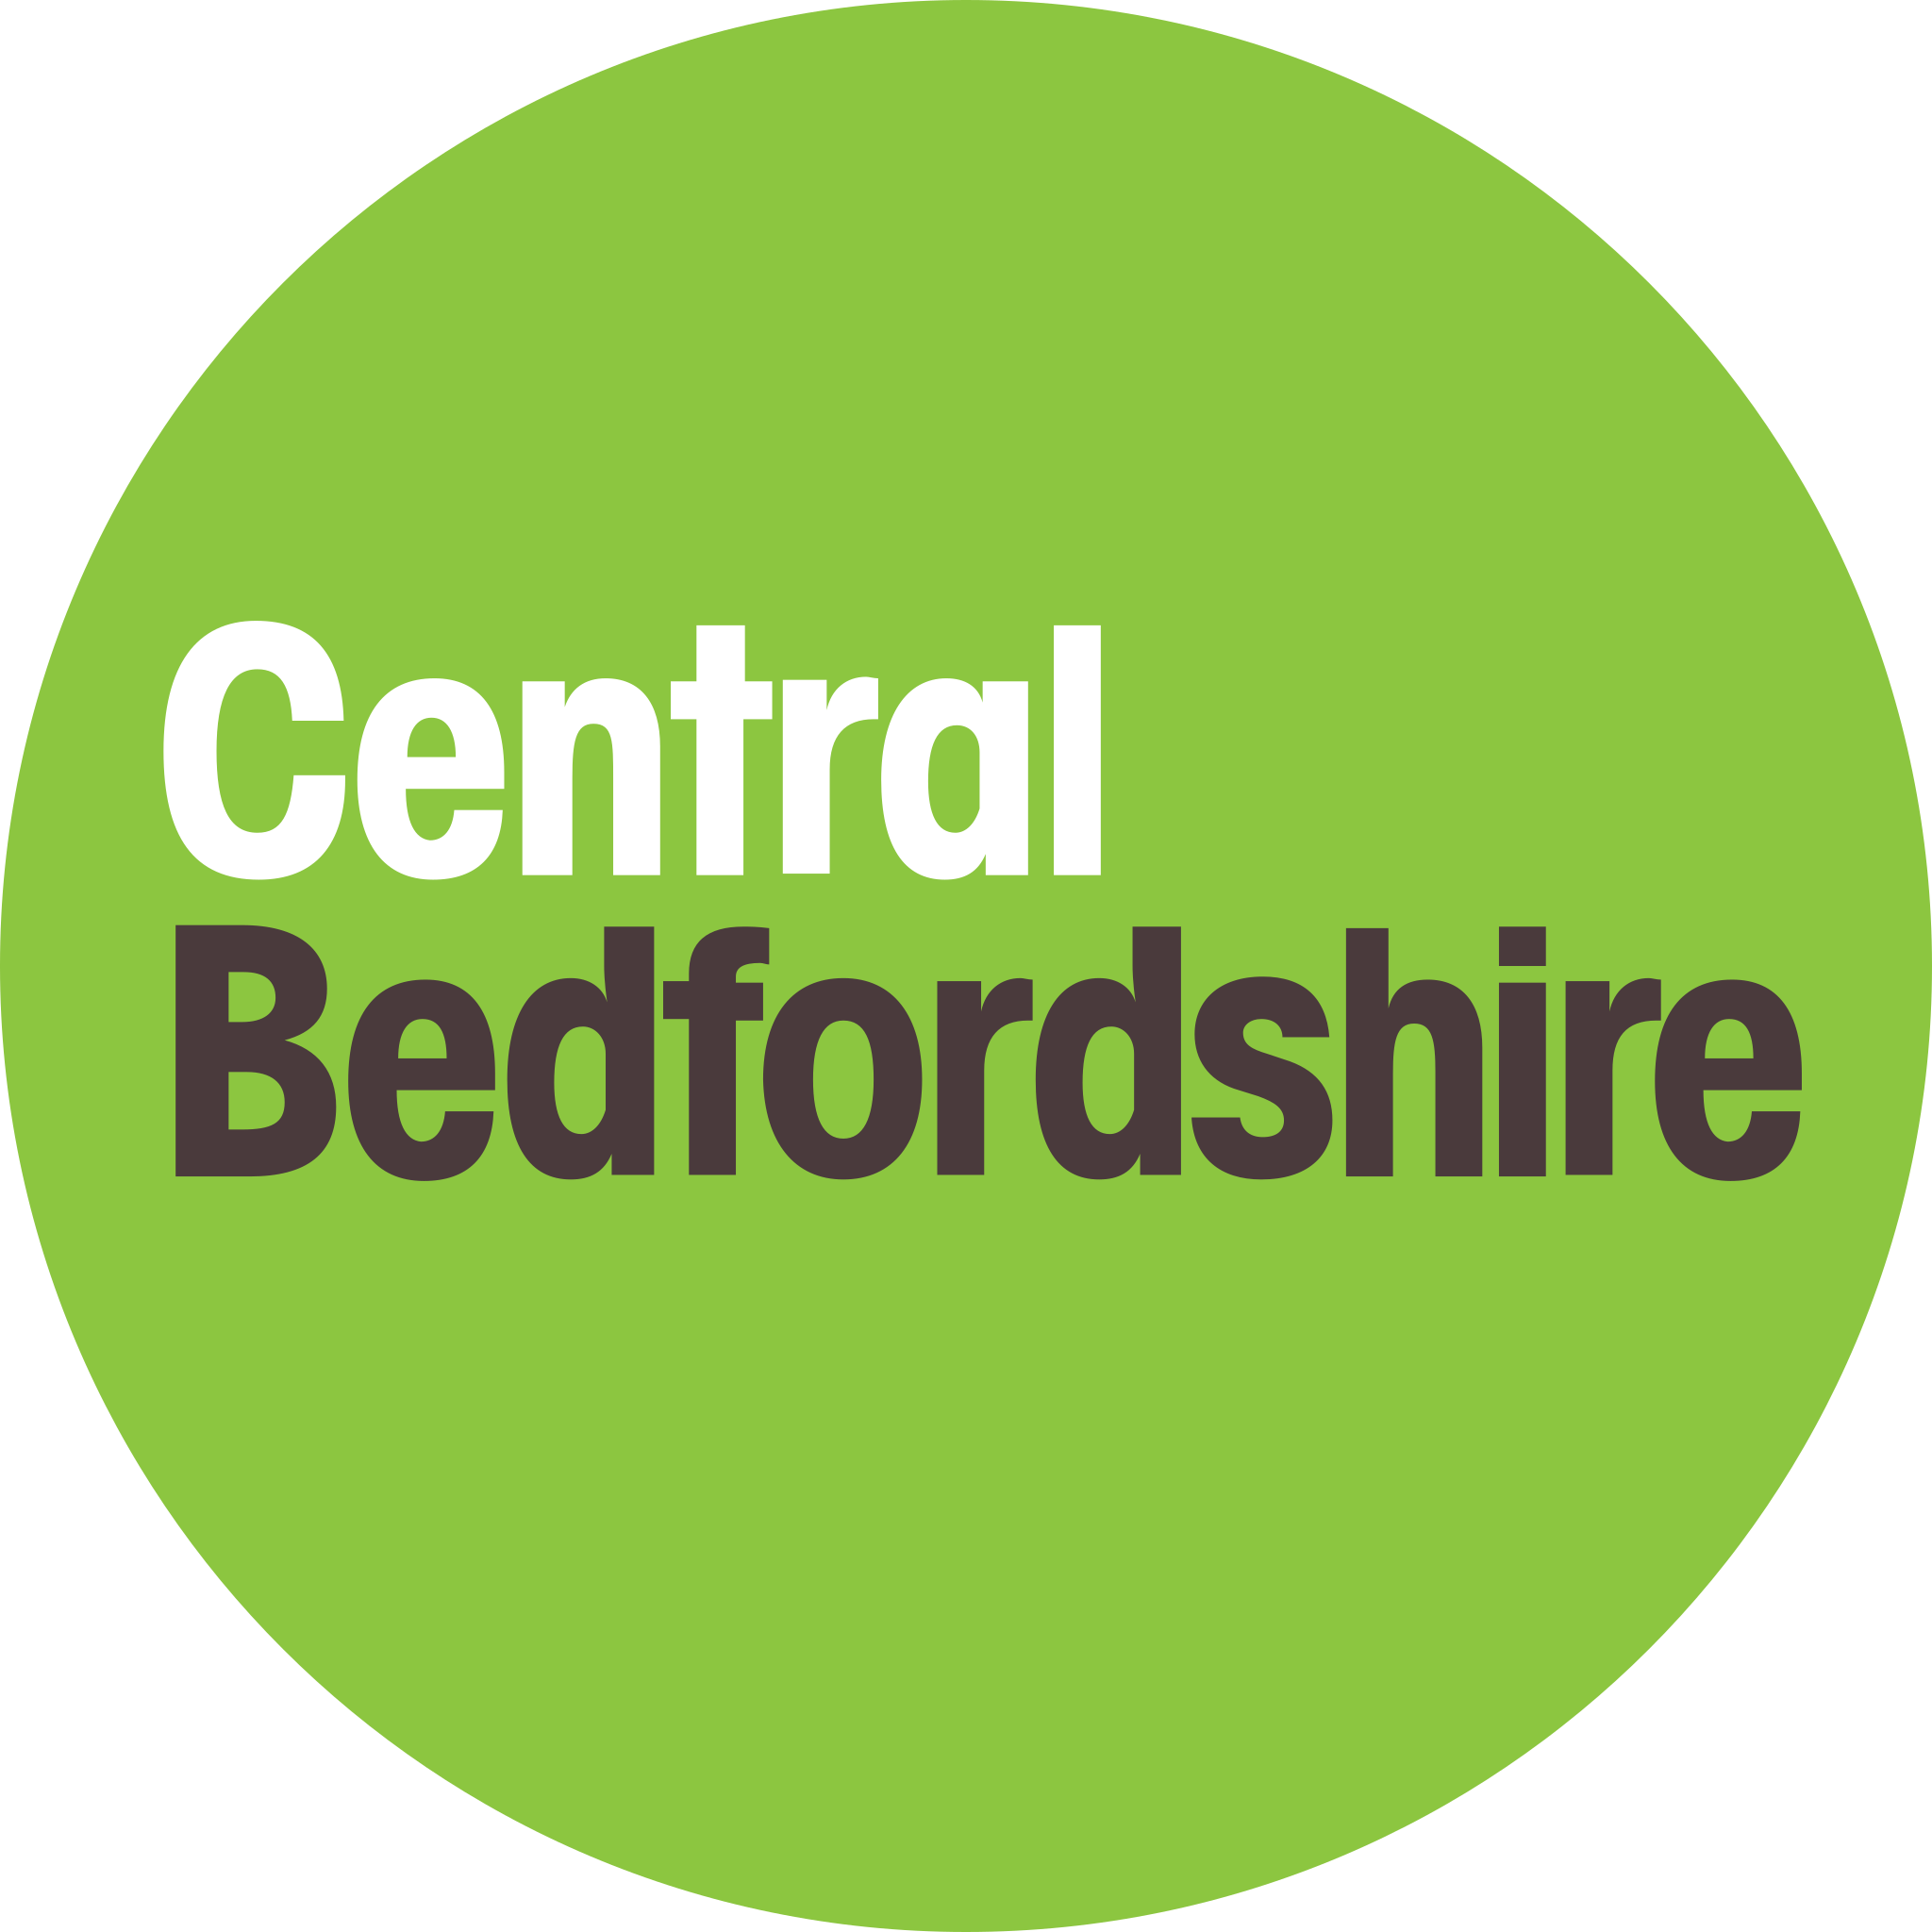 Central Bedfordshire council logo